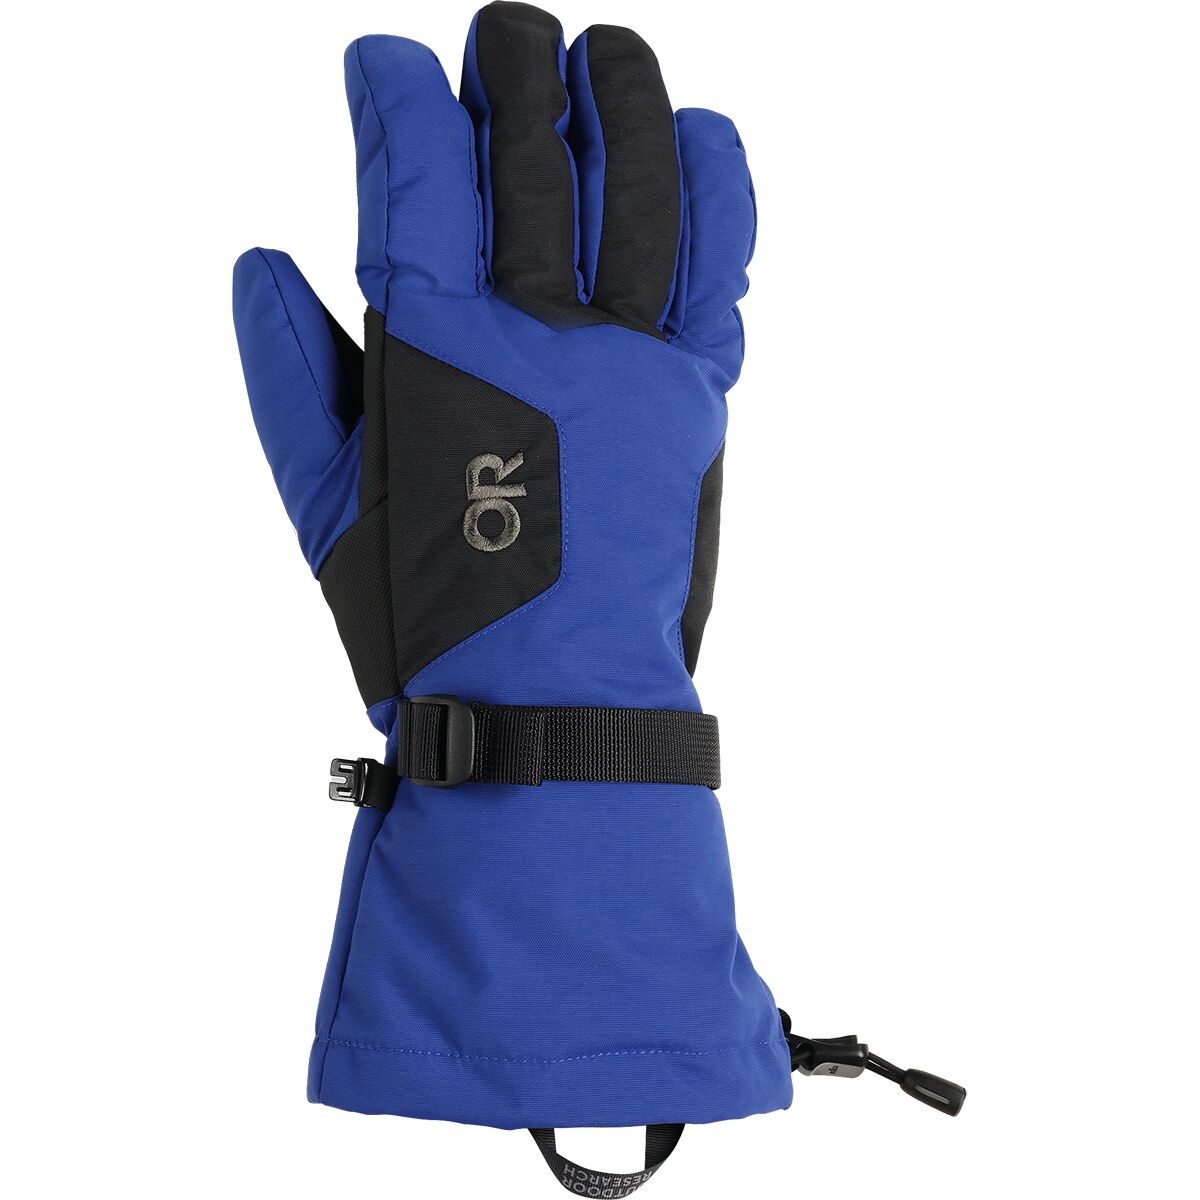 Outdoor Research Adrenaline Glove - Men's Galaxy